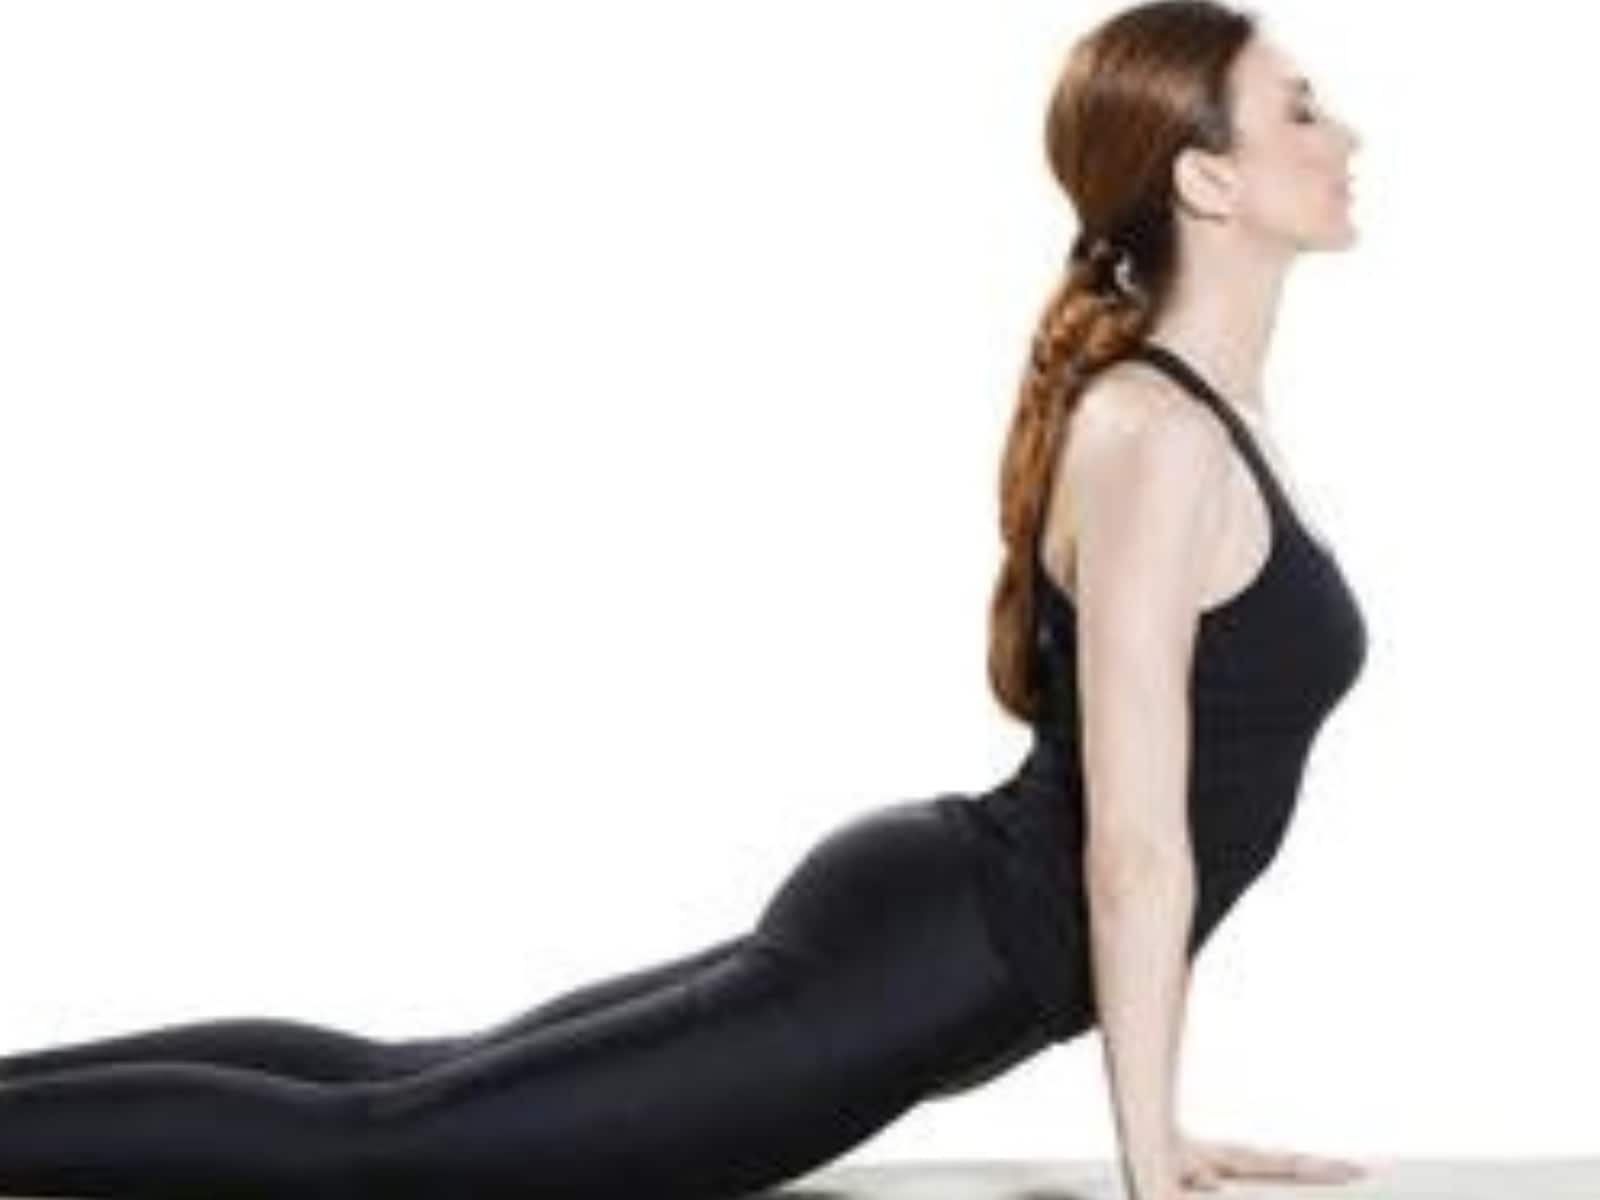 Simha asana -- a yoga asana to relieve throat problems | TheHealthSite.com